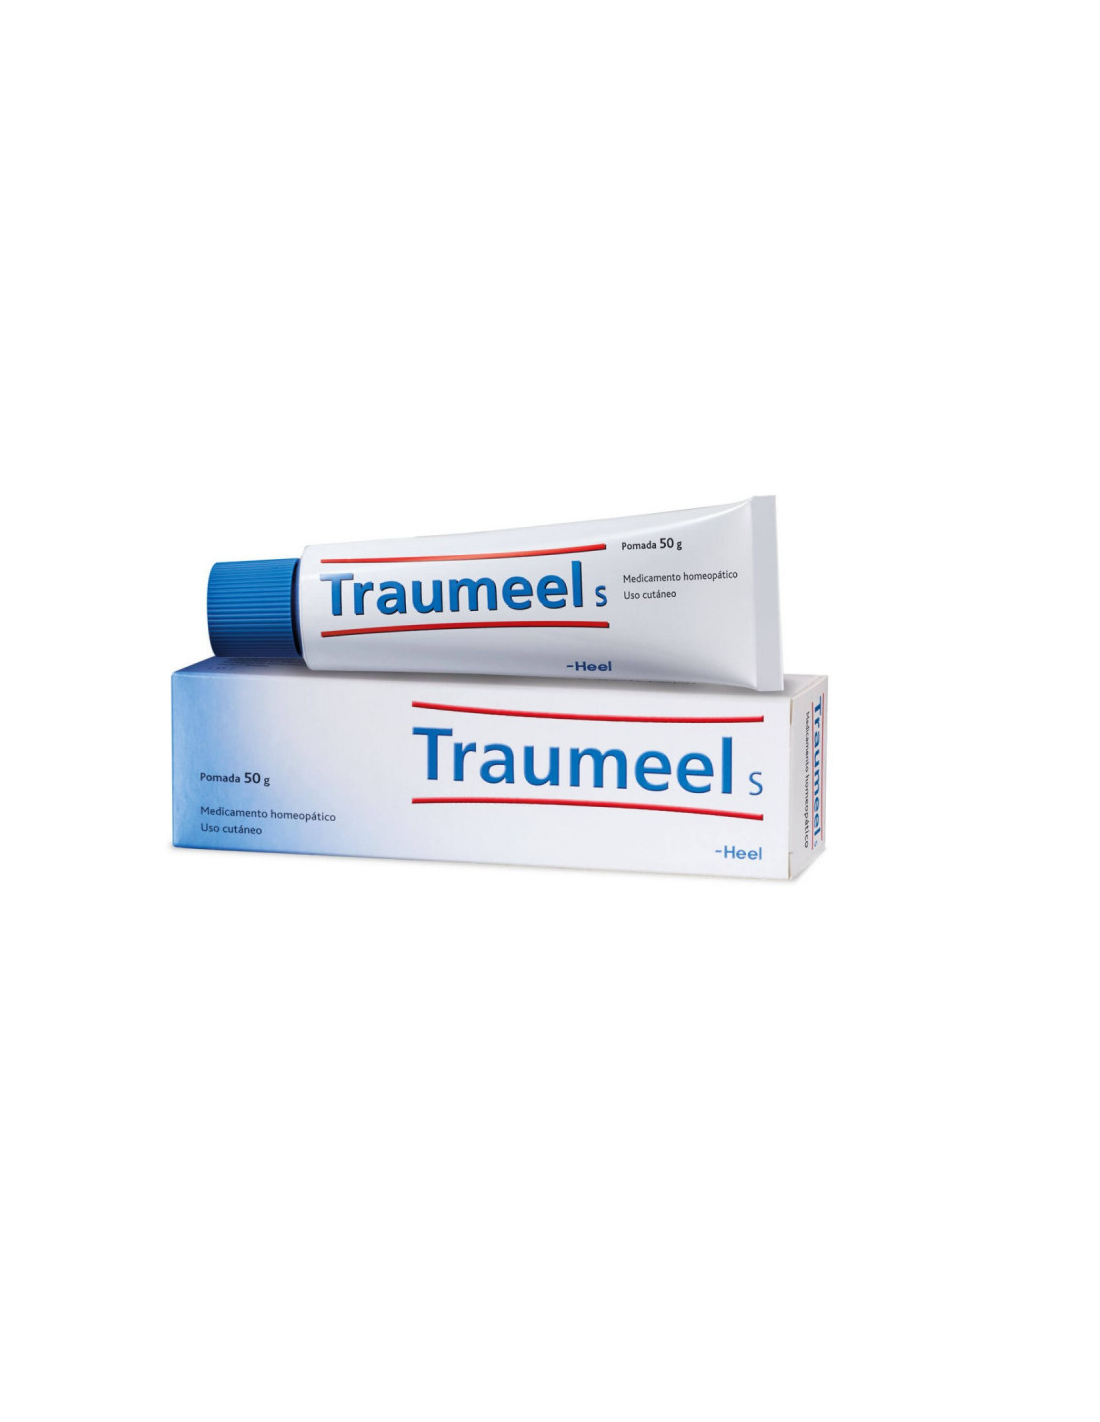 Traumeel S Pomada 50 Grs. Antiinflamatorio Uso Tópico, Productos